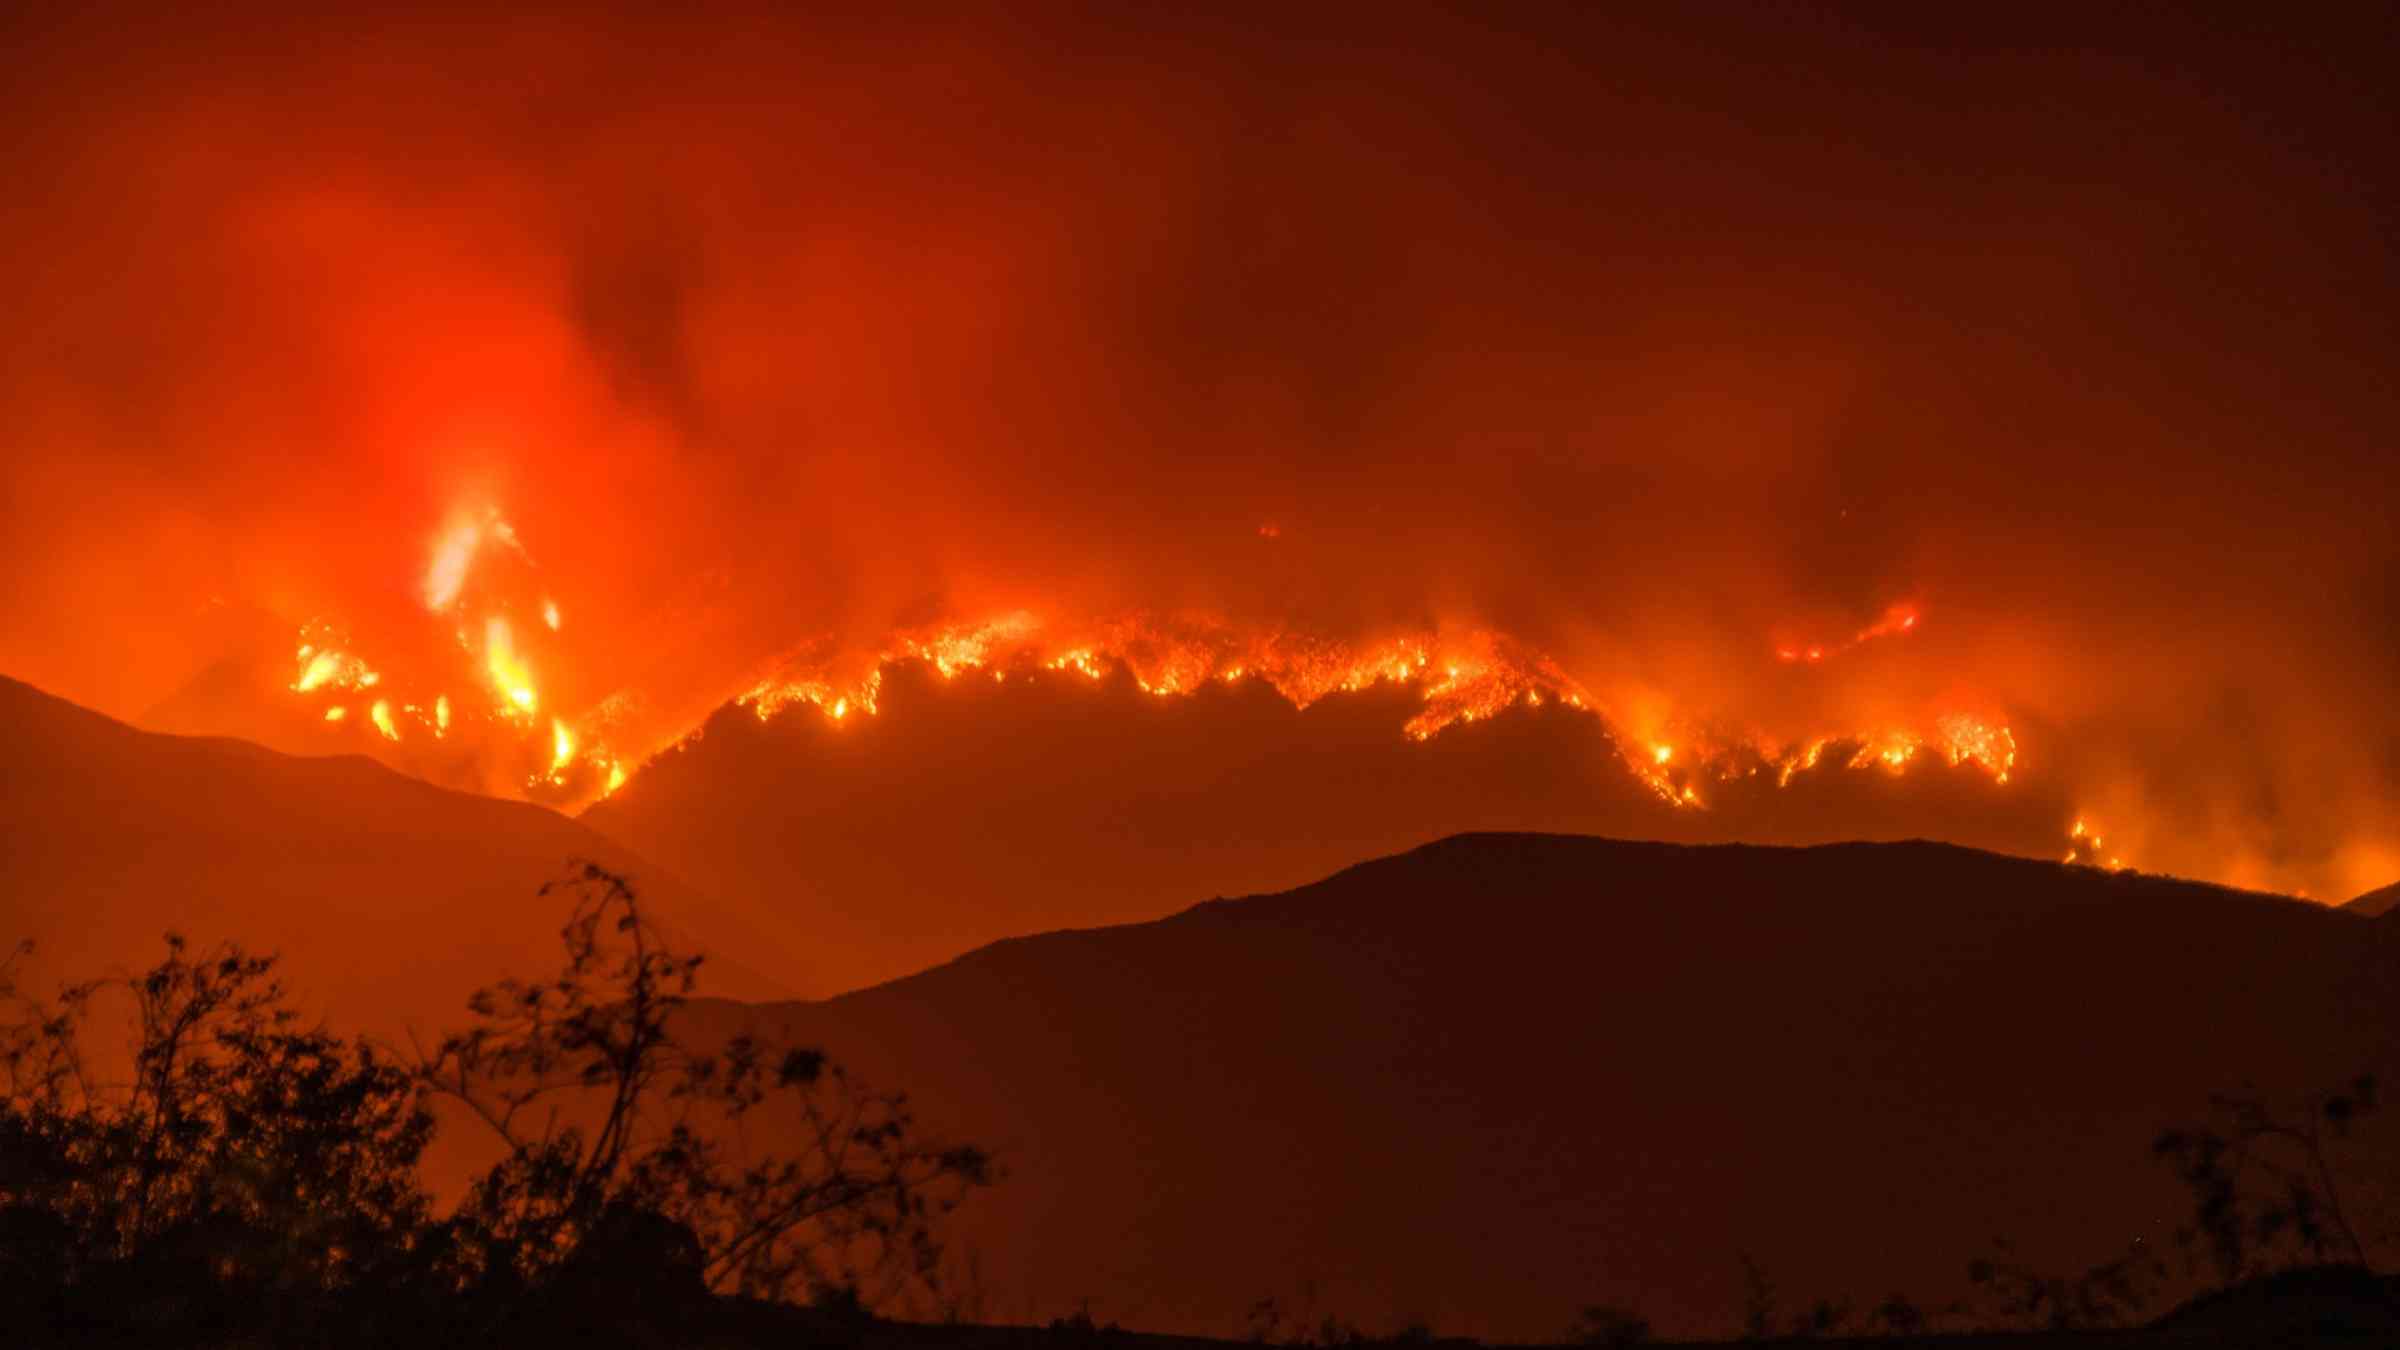 Wildfire Whittier California 2017